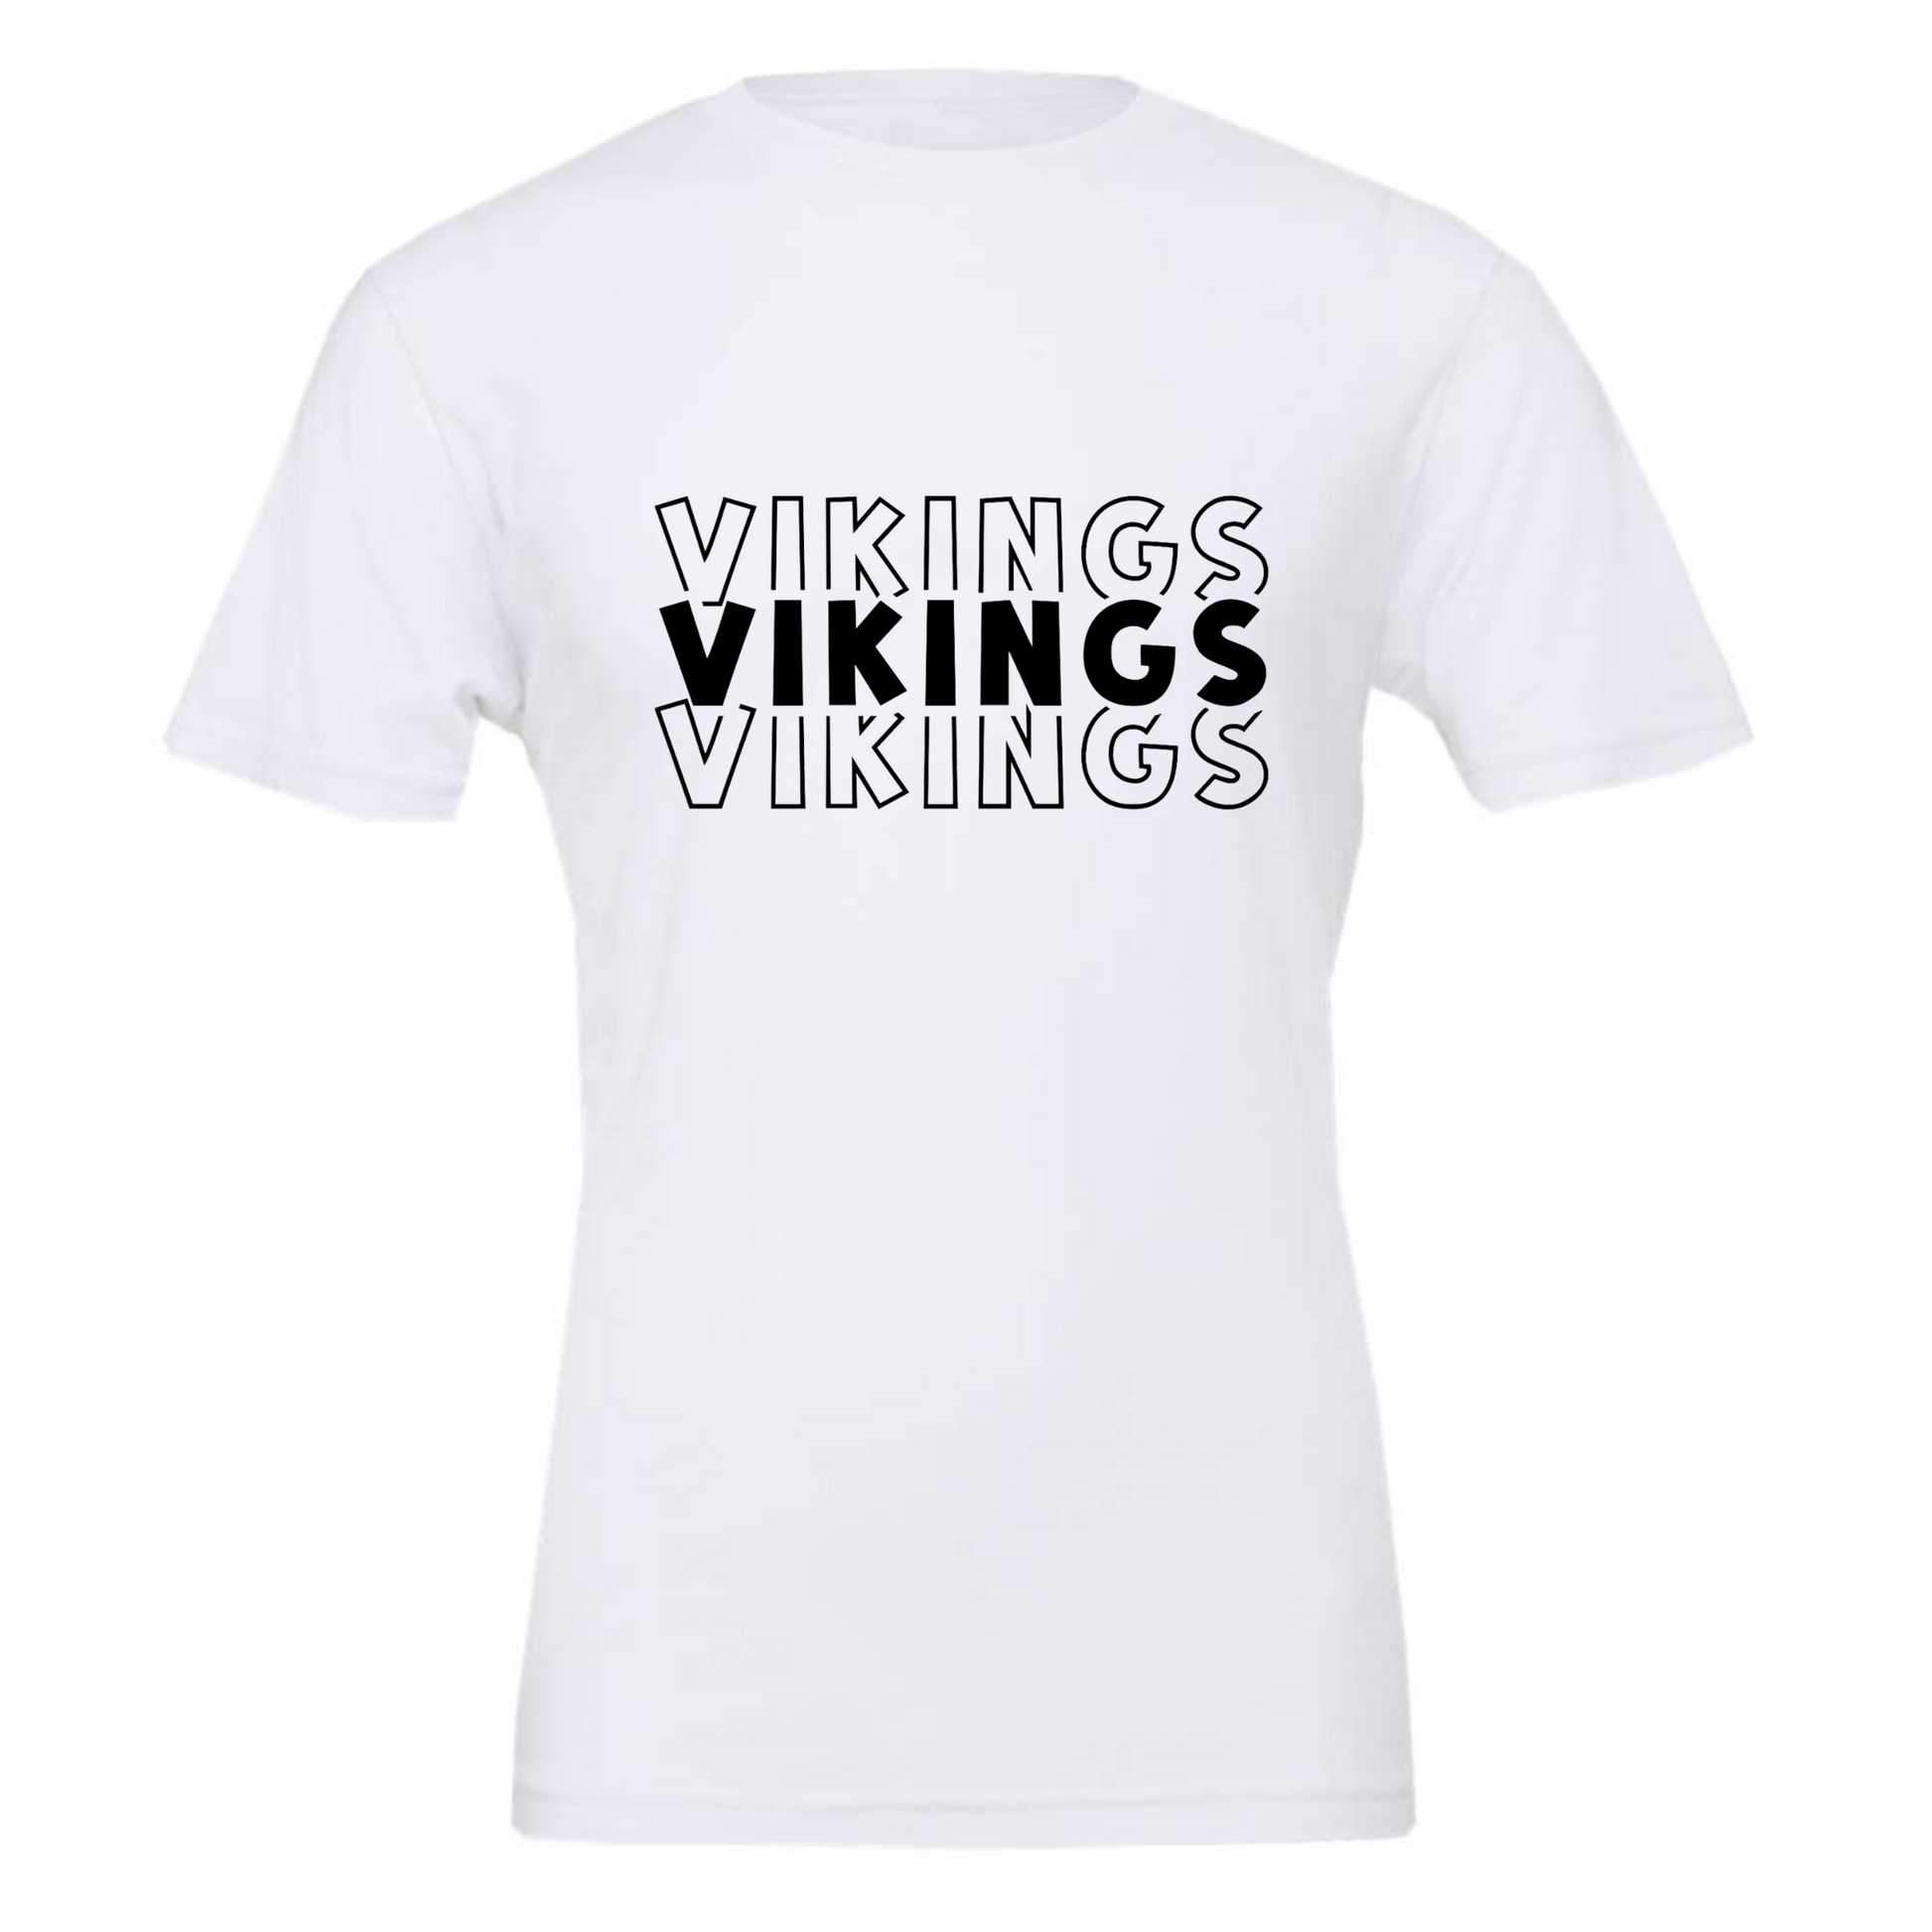 the vikings t shirt